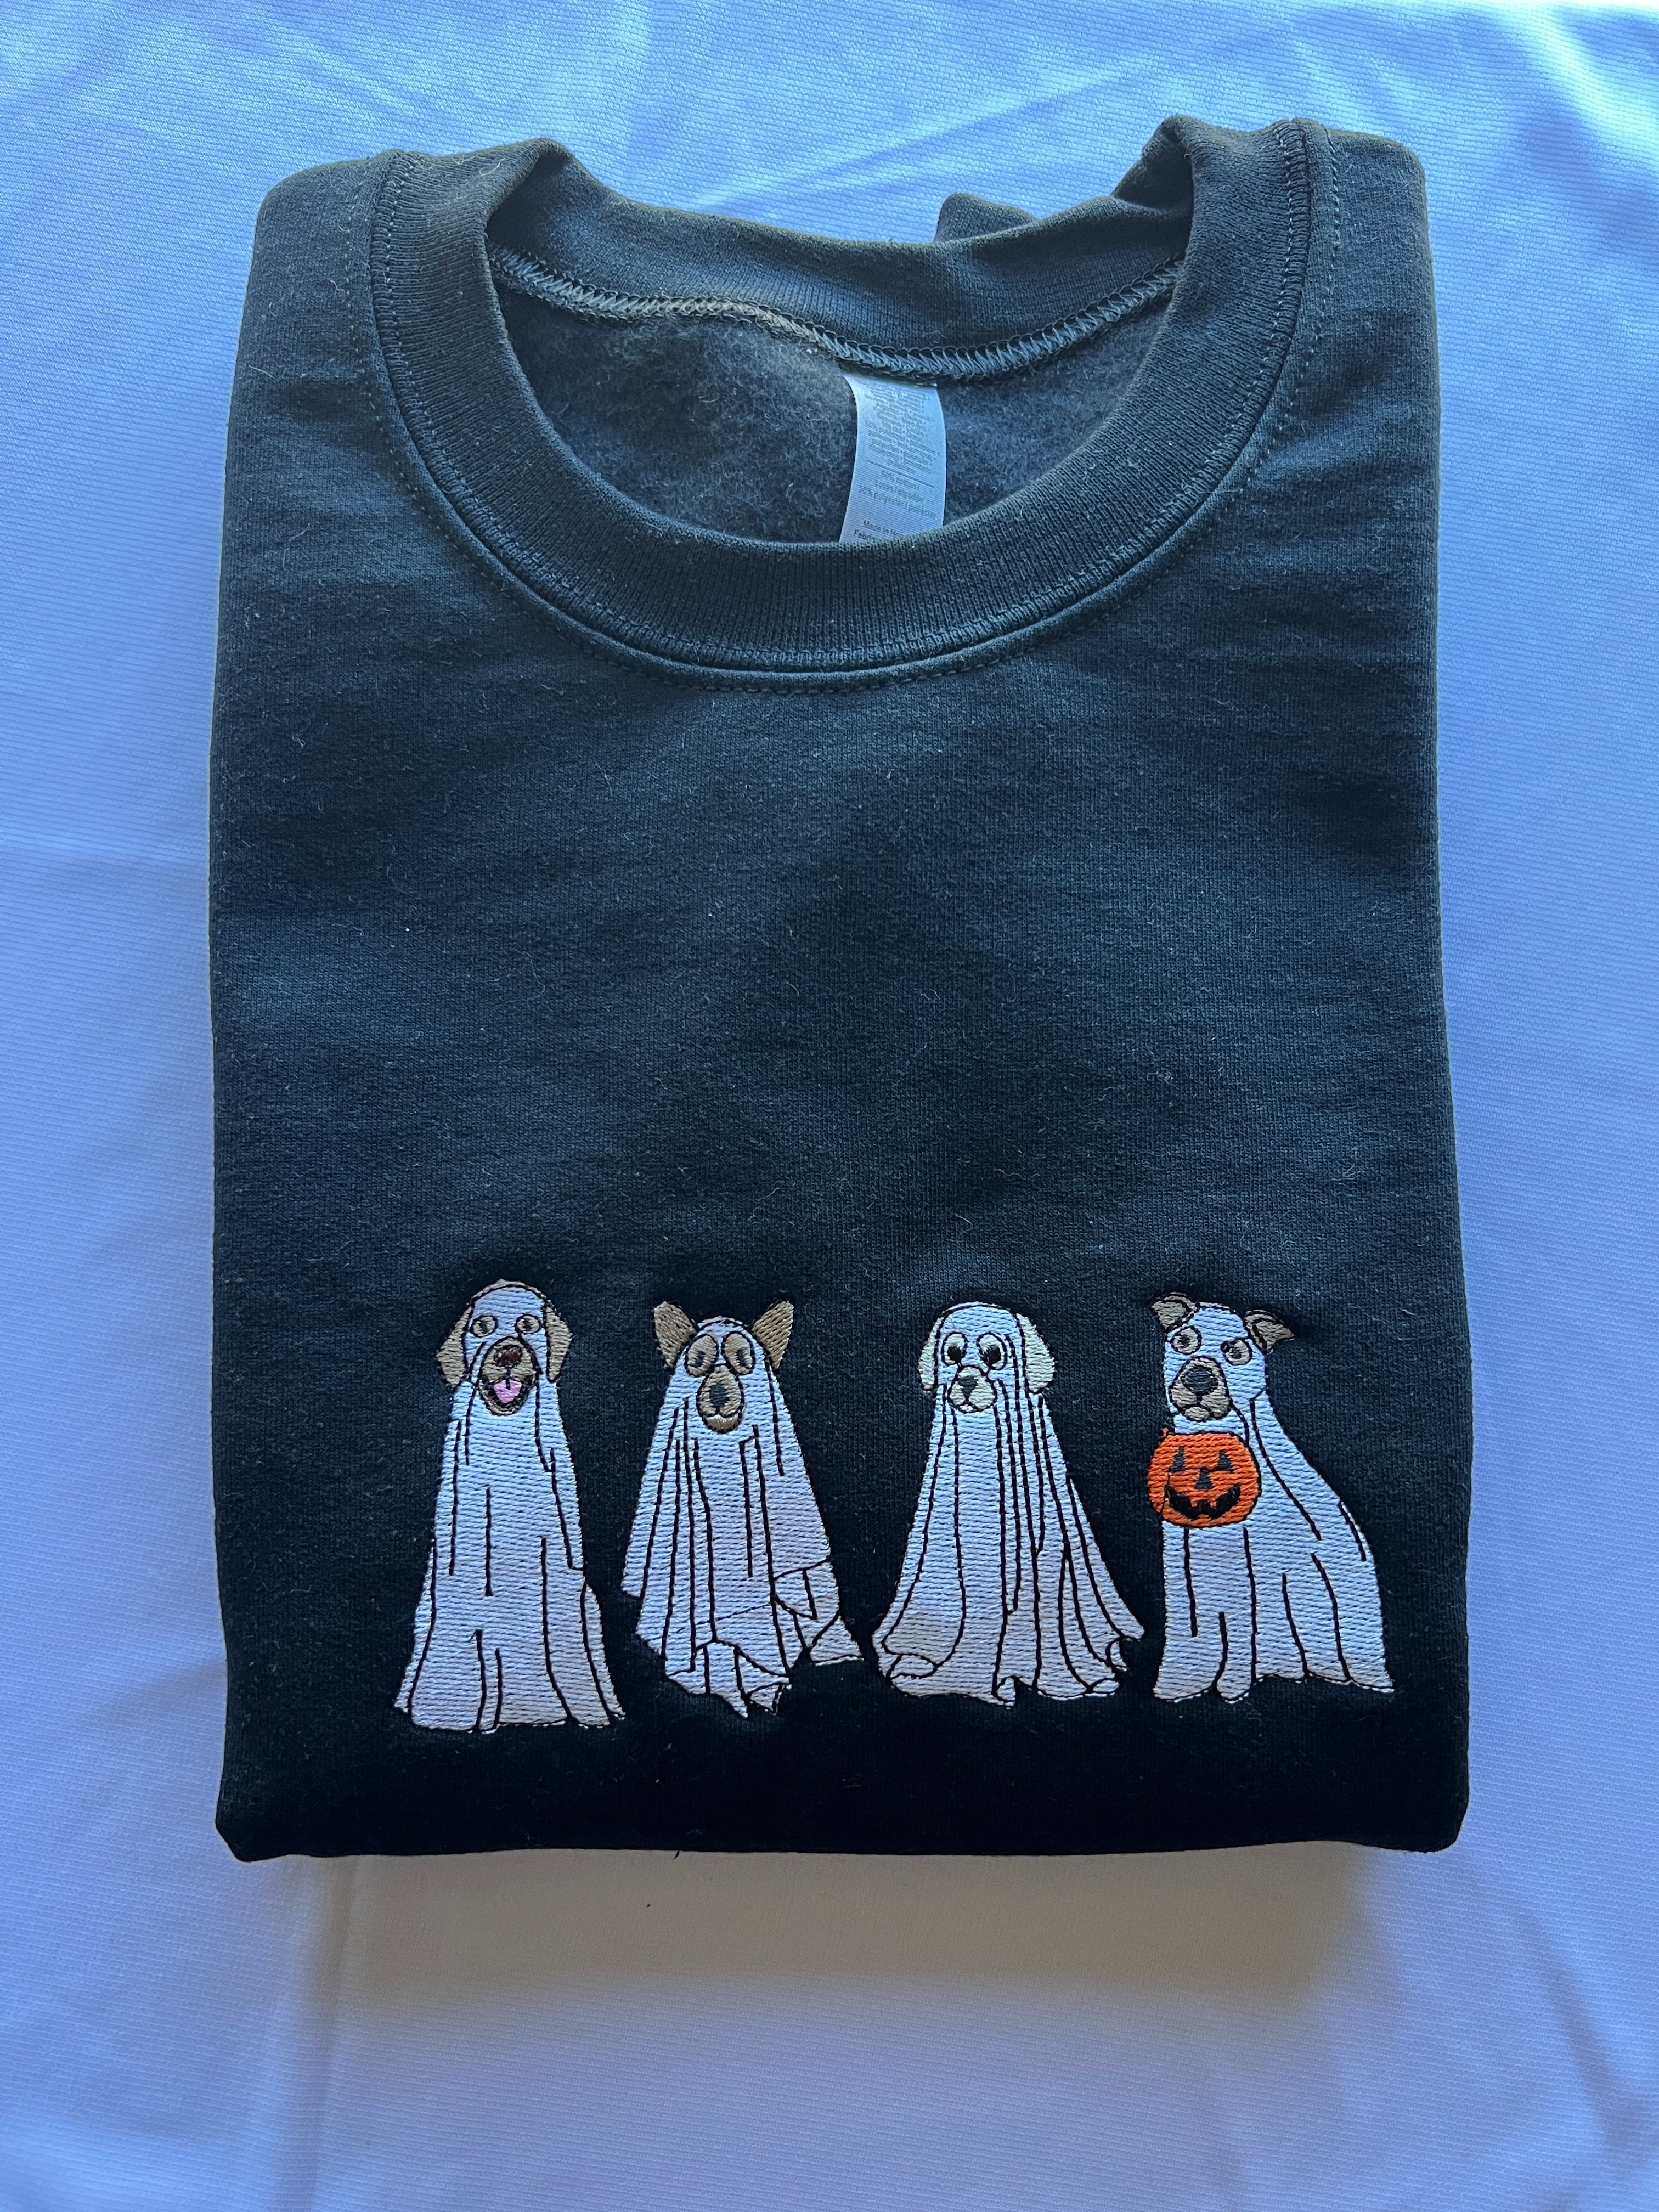 Ghost Dog sweatshirt